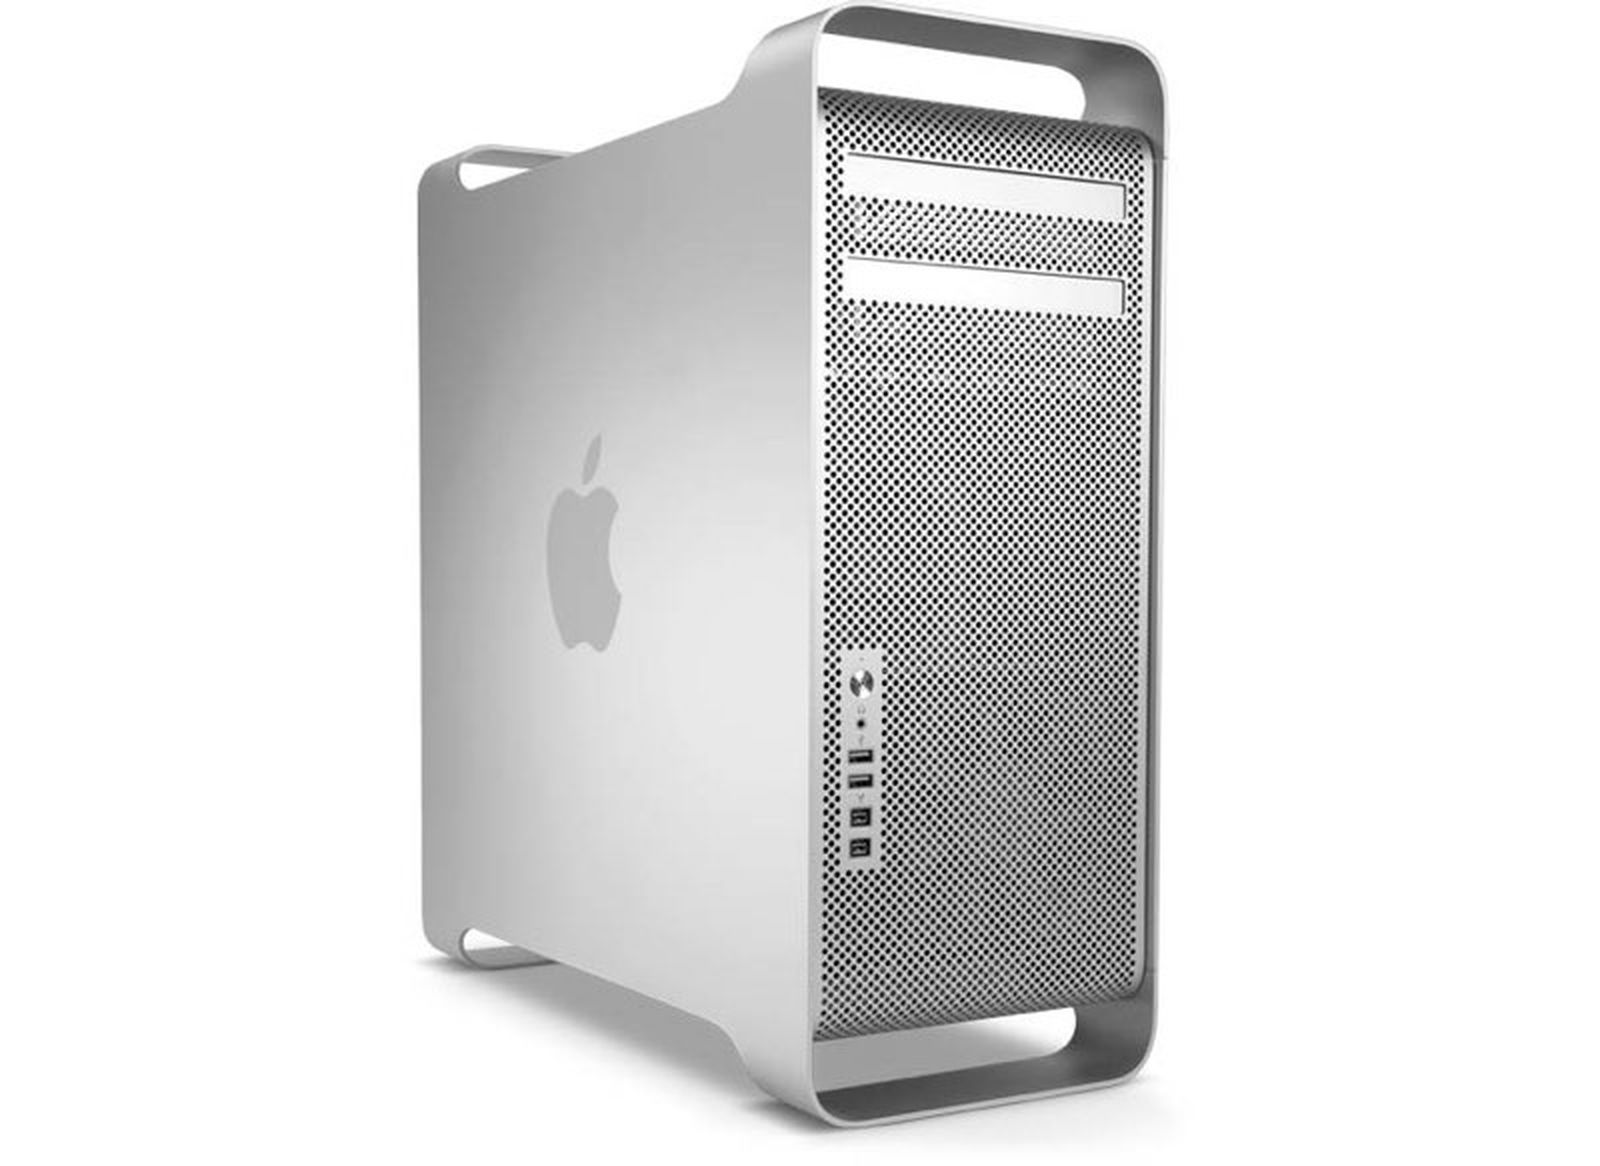 macbook pro mid 2010 upgrade graphics card